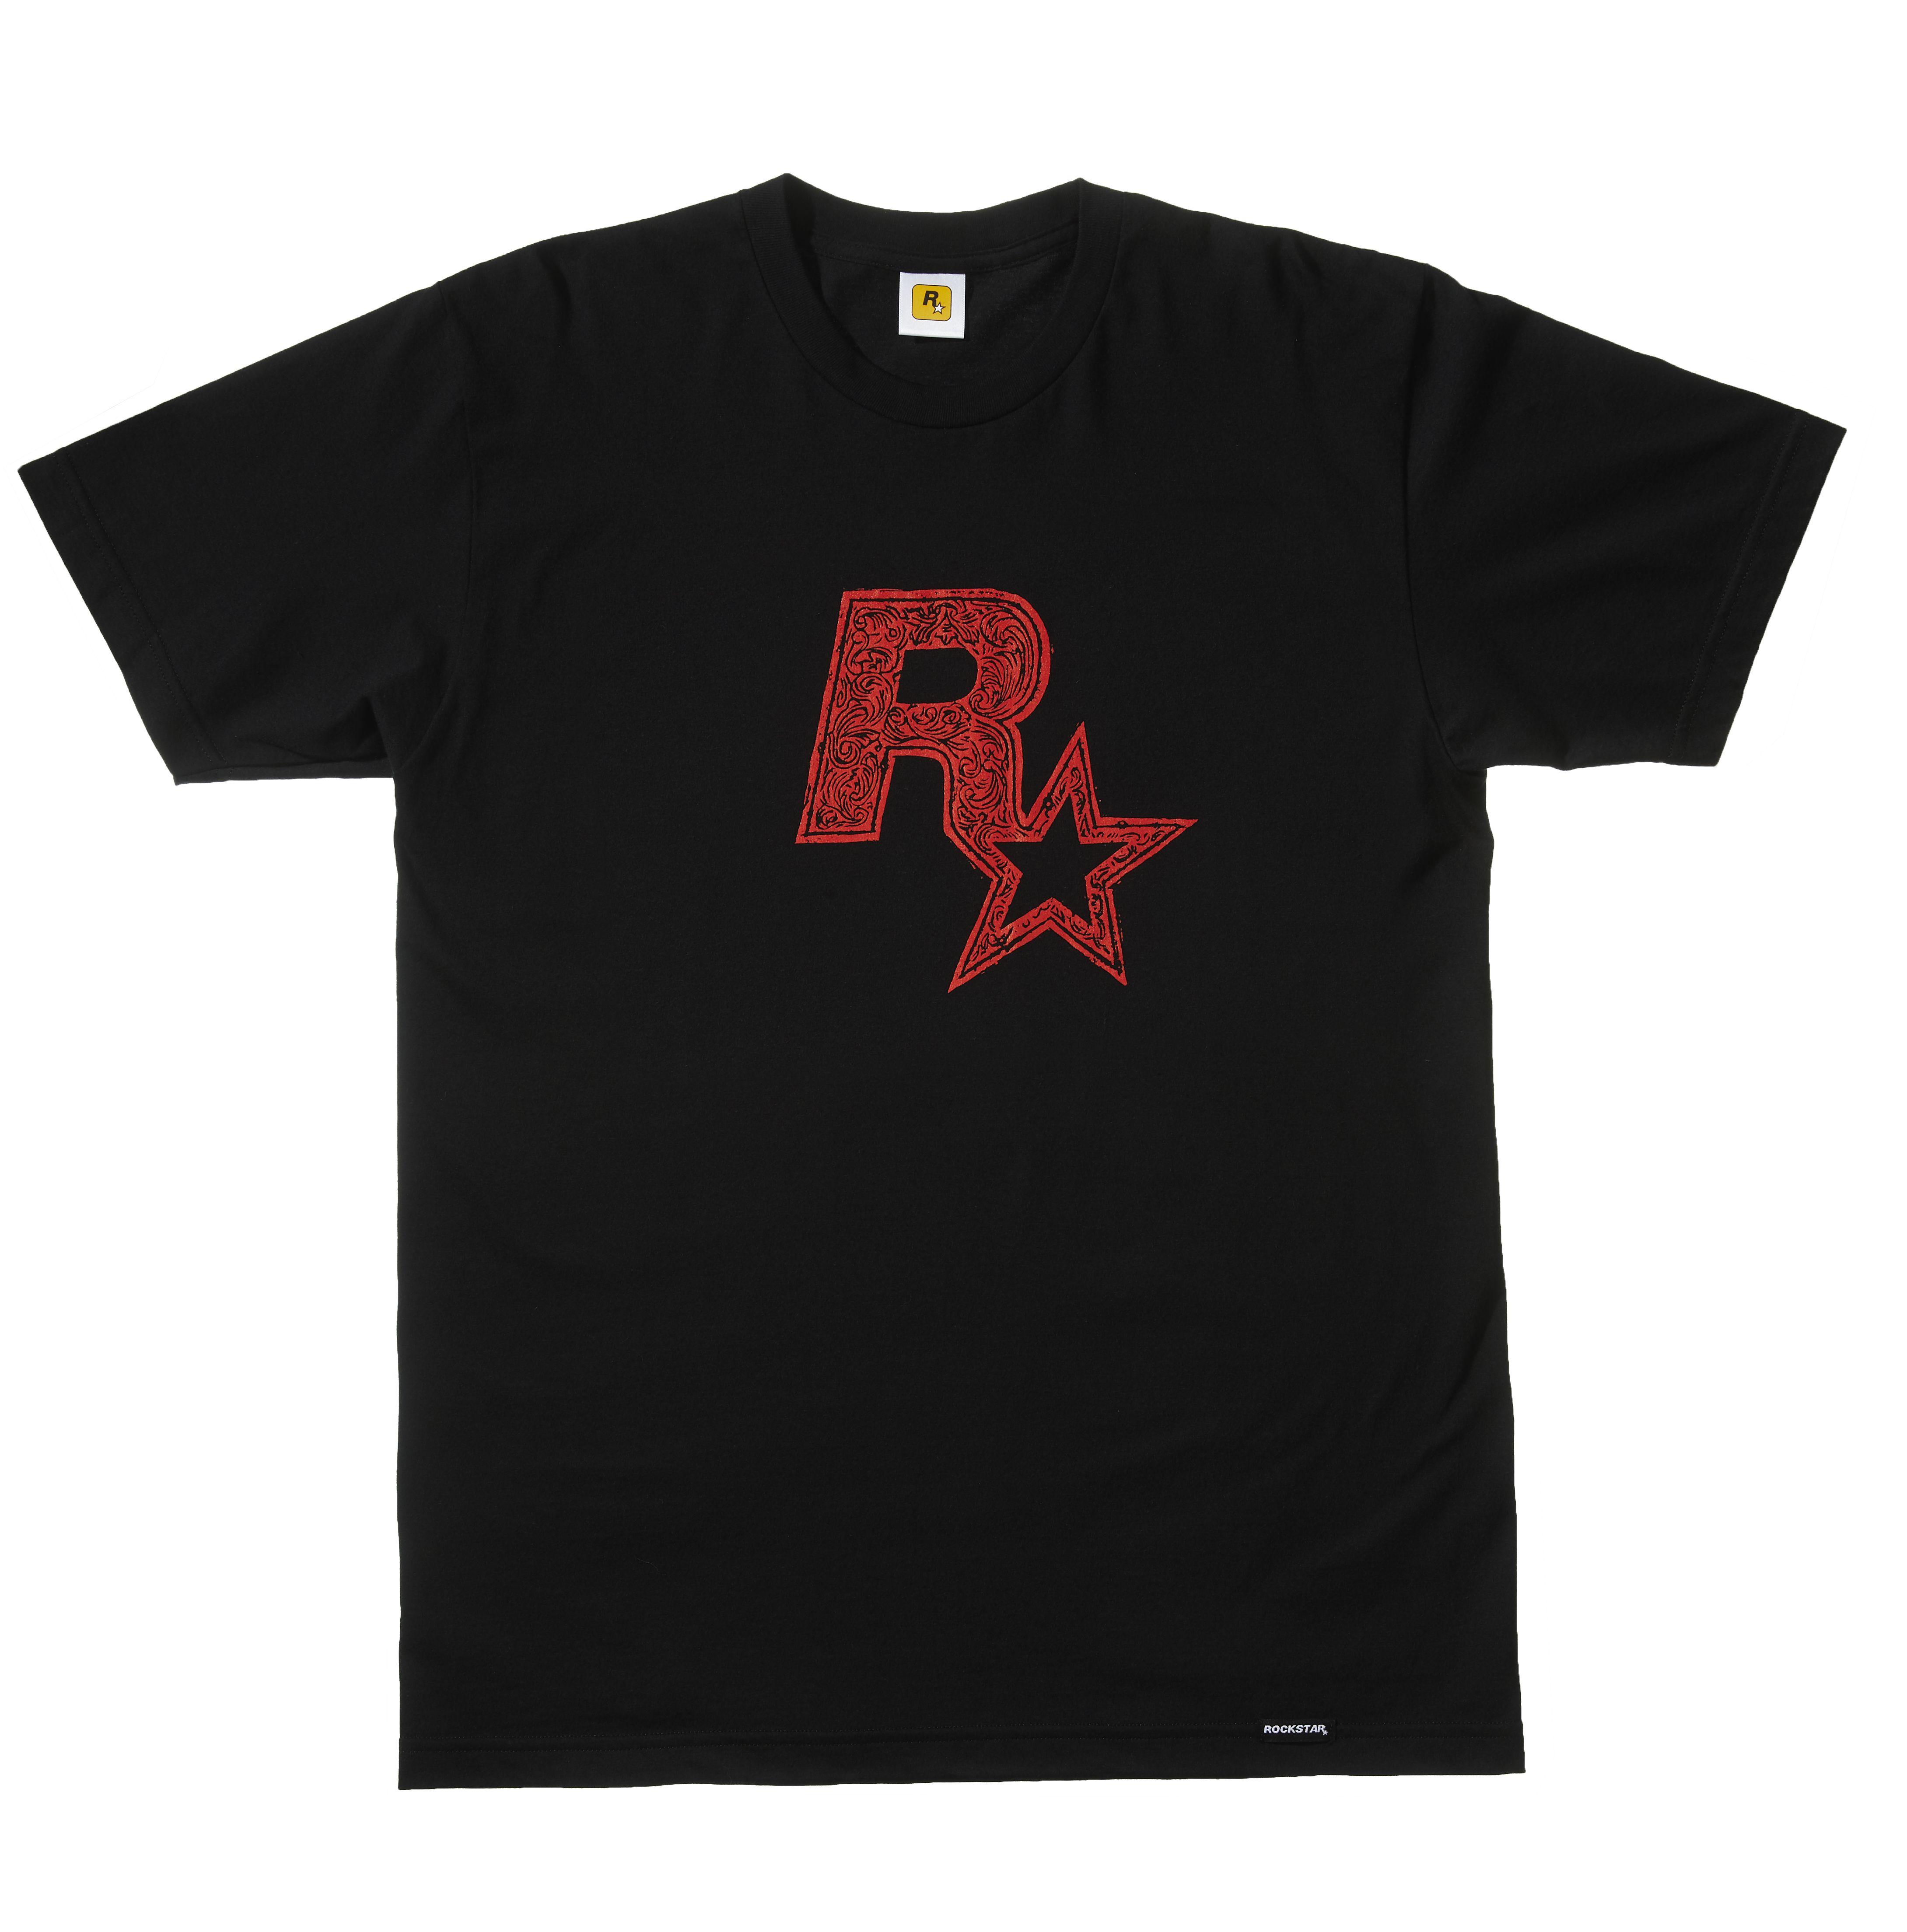 Rockstar Games Logo - Enter To Win The Black Linocut Rockstar Games Logo T Shirt